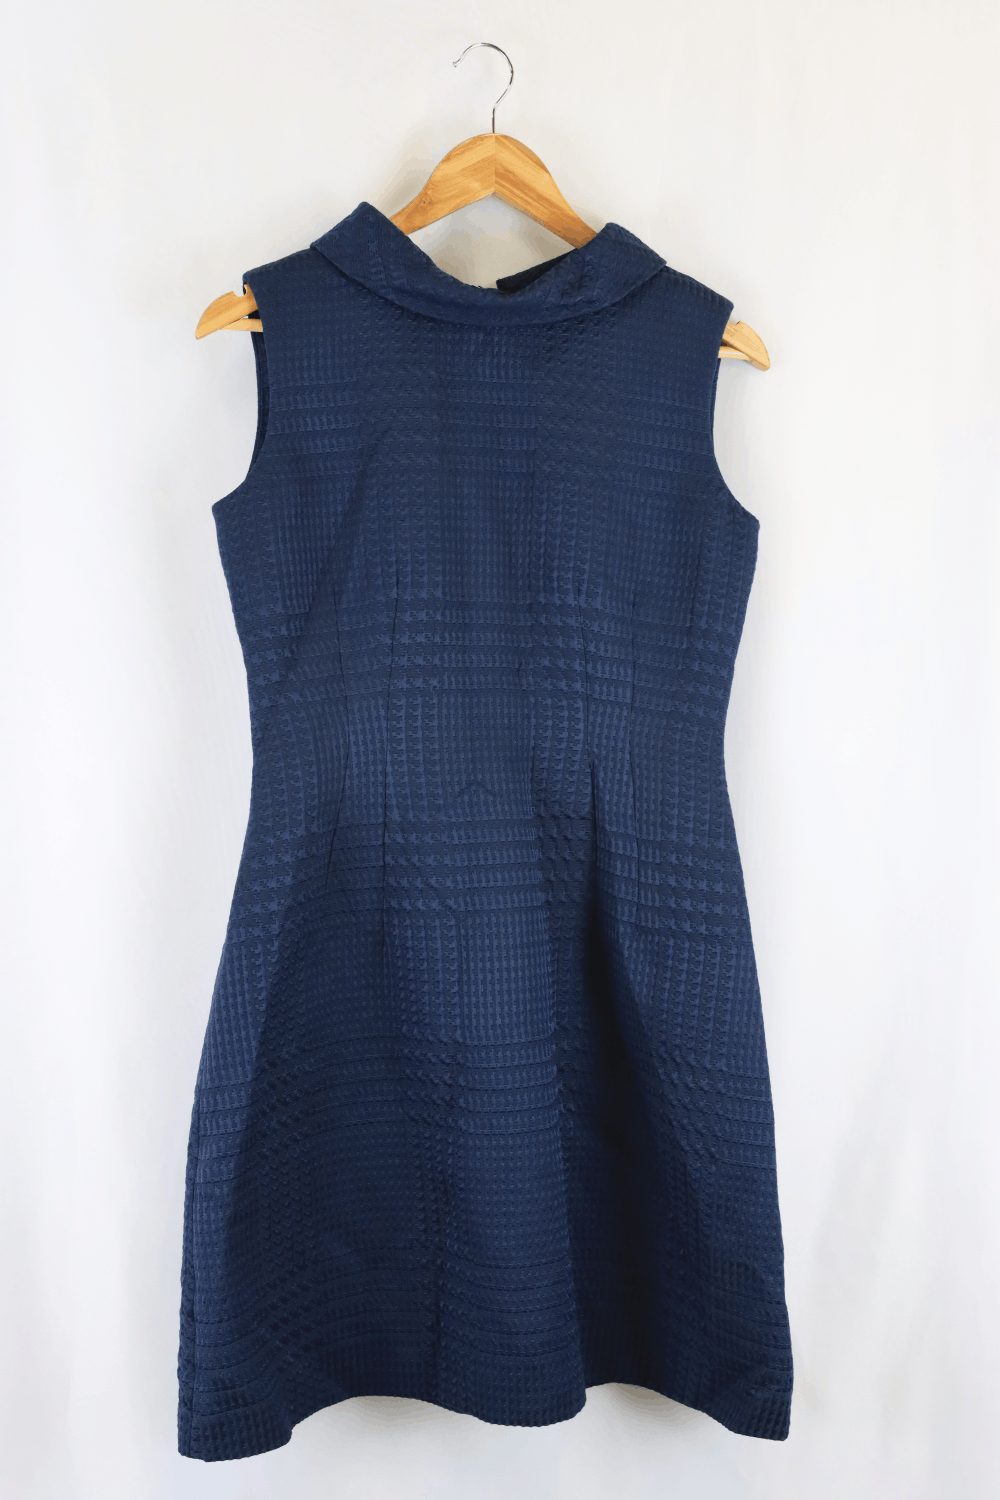 Gant Dress Blue Woven Design 12